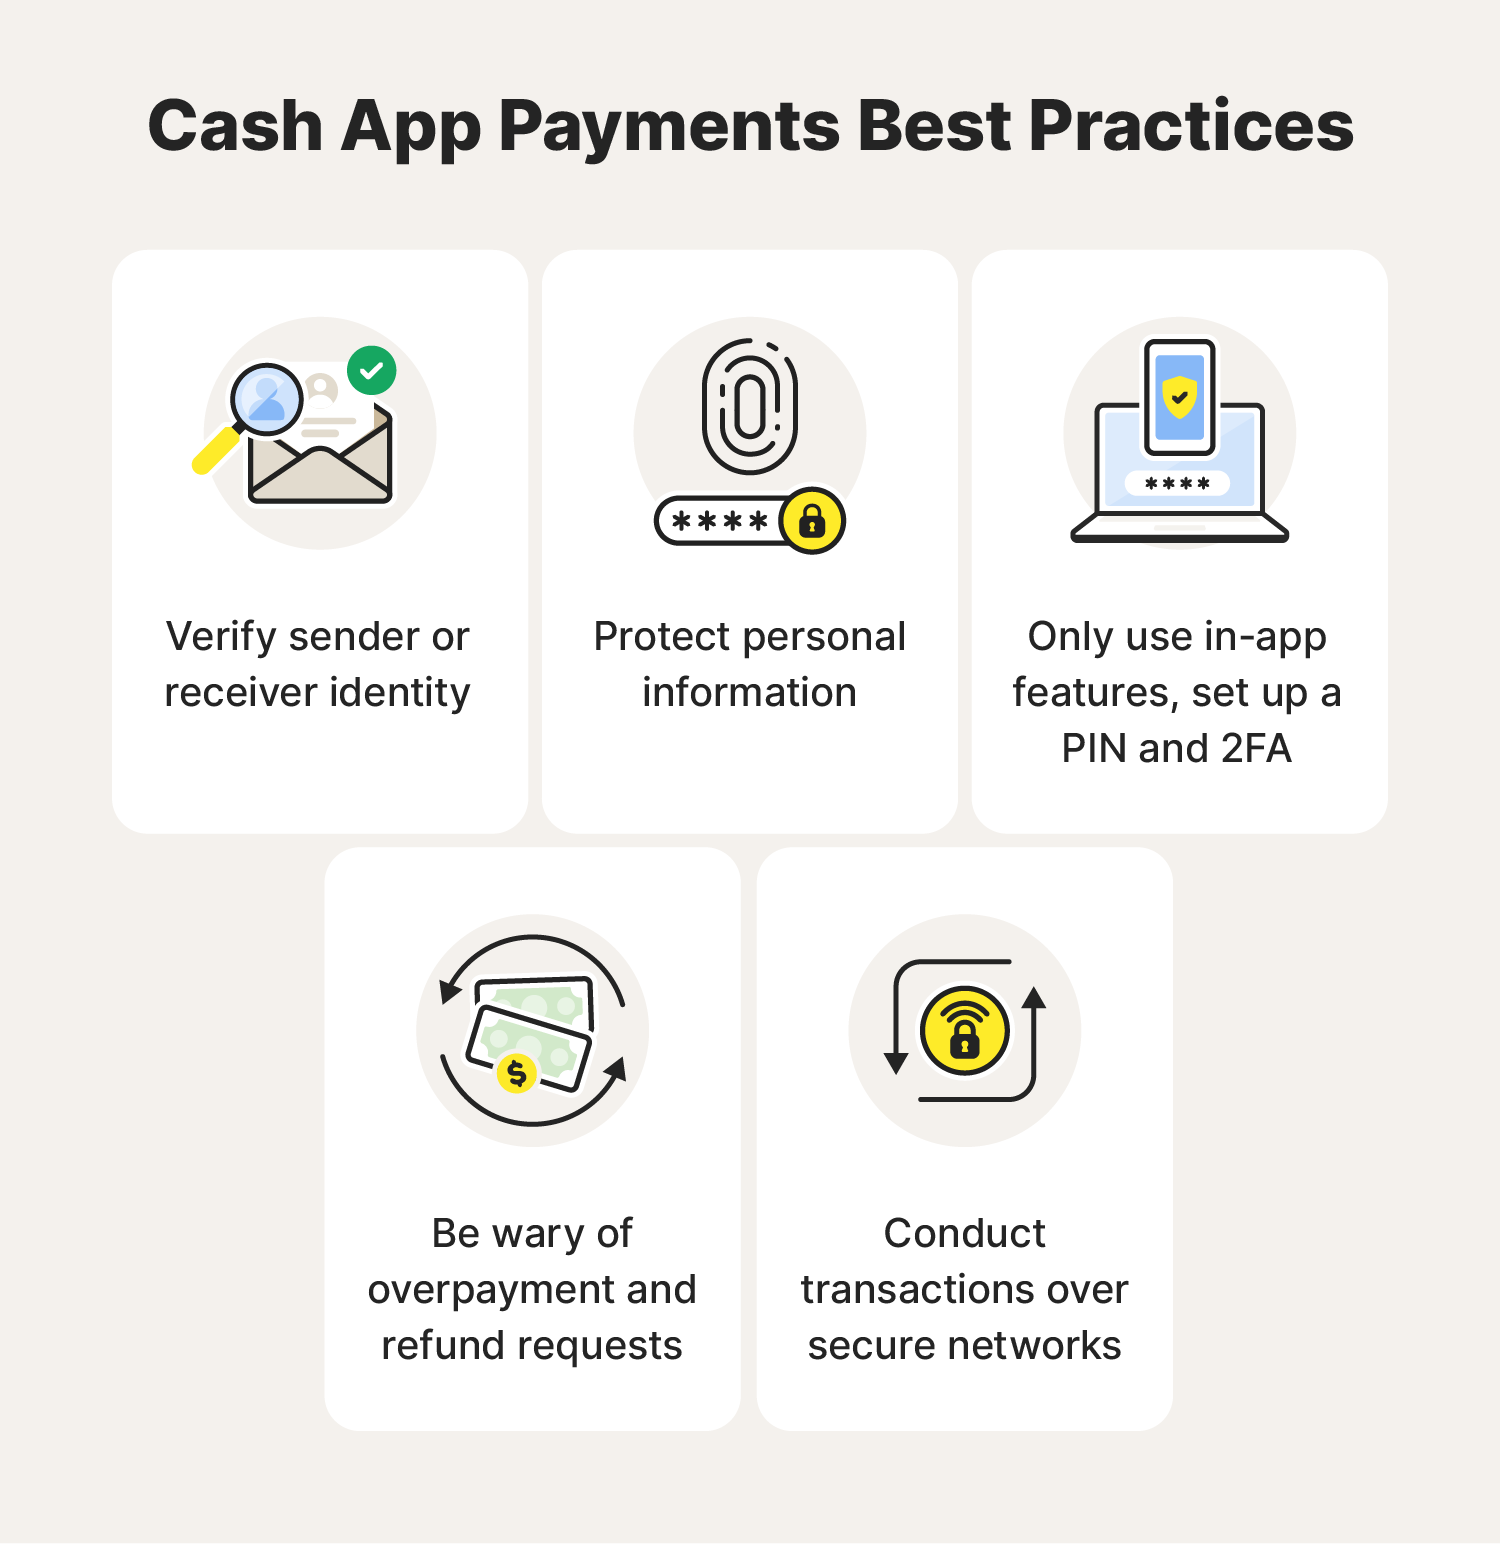 An illustration shows best practices against Cash App scams.